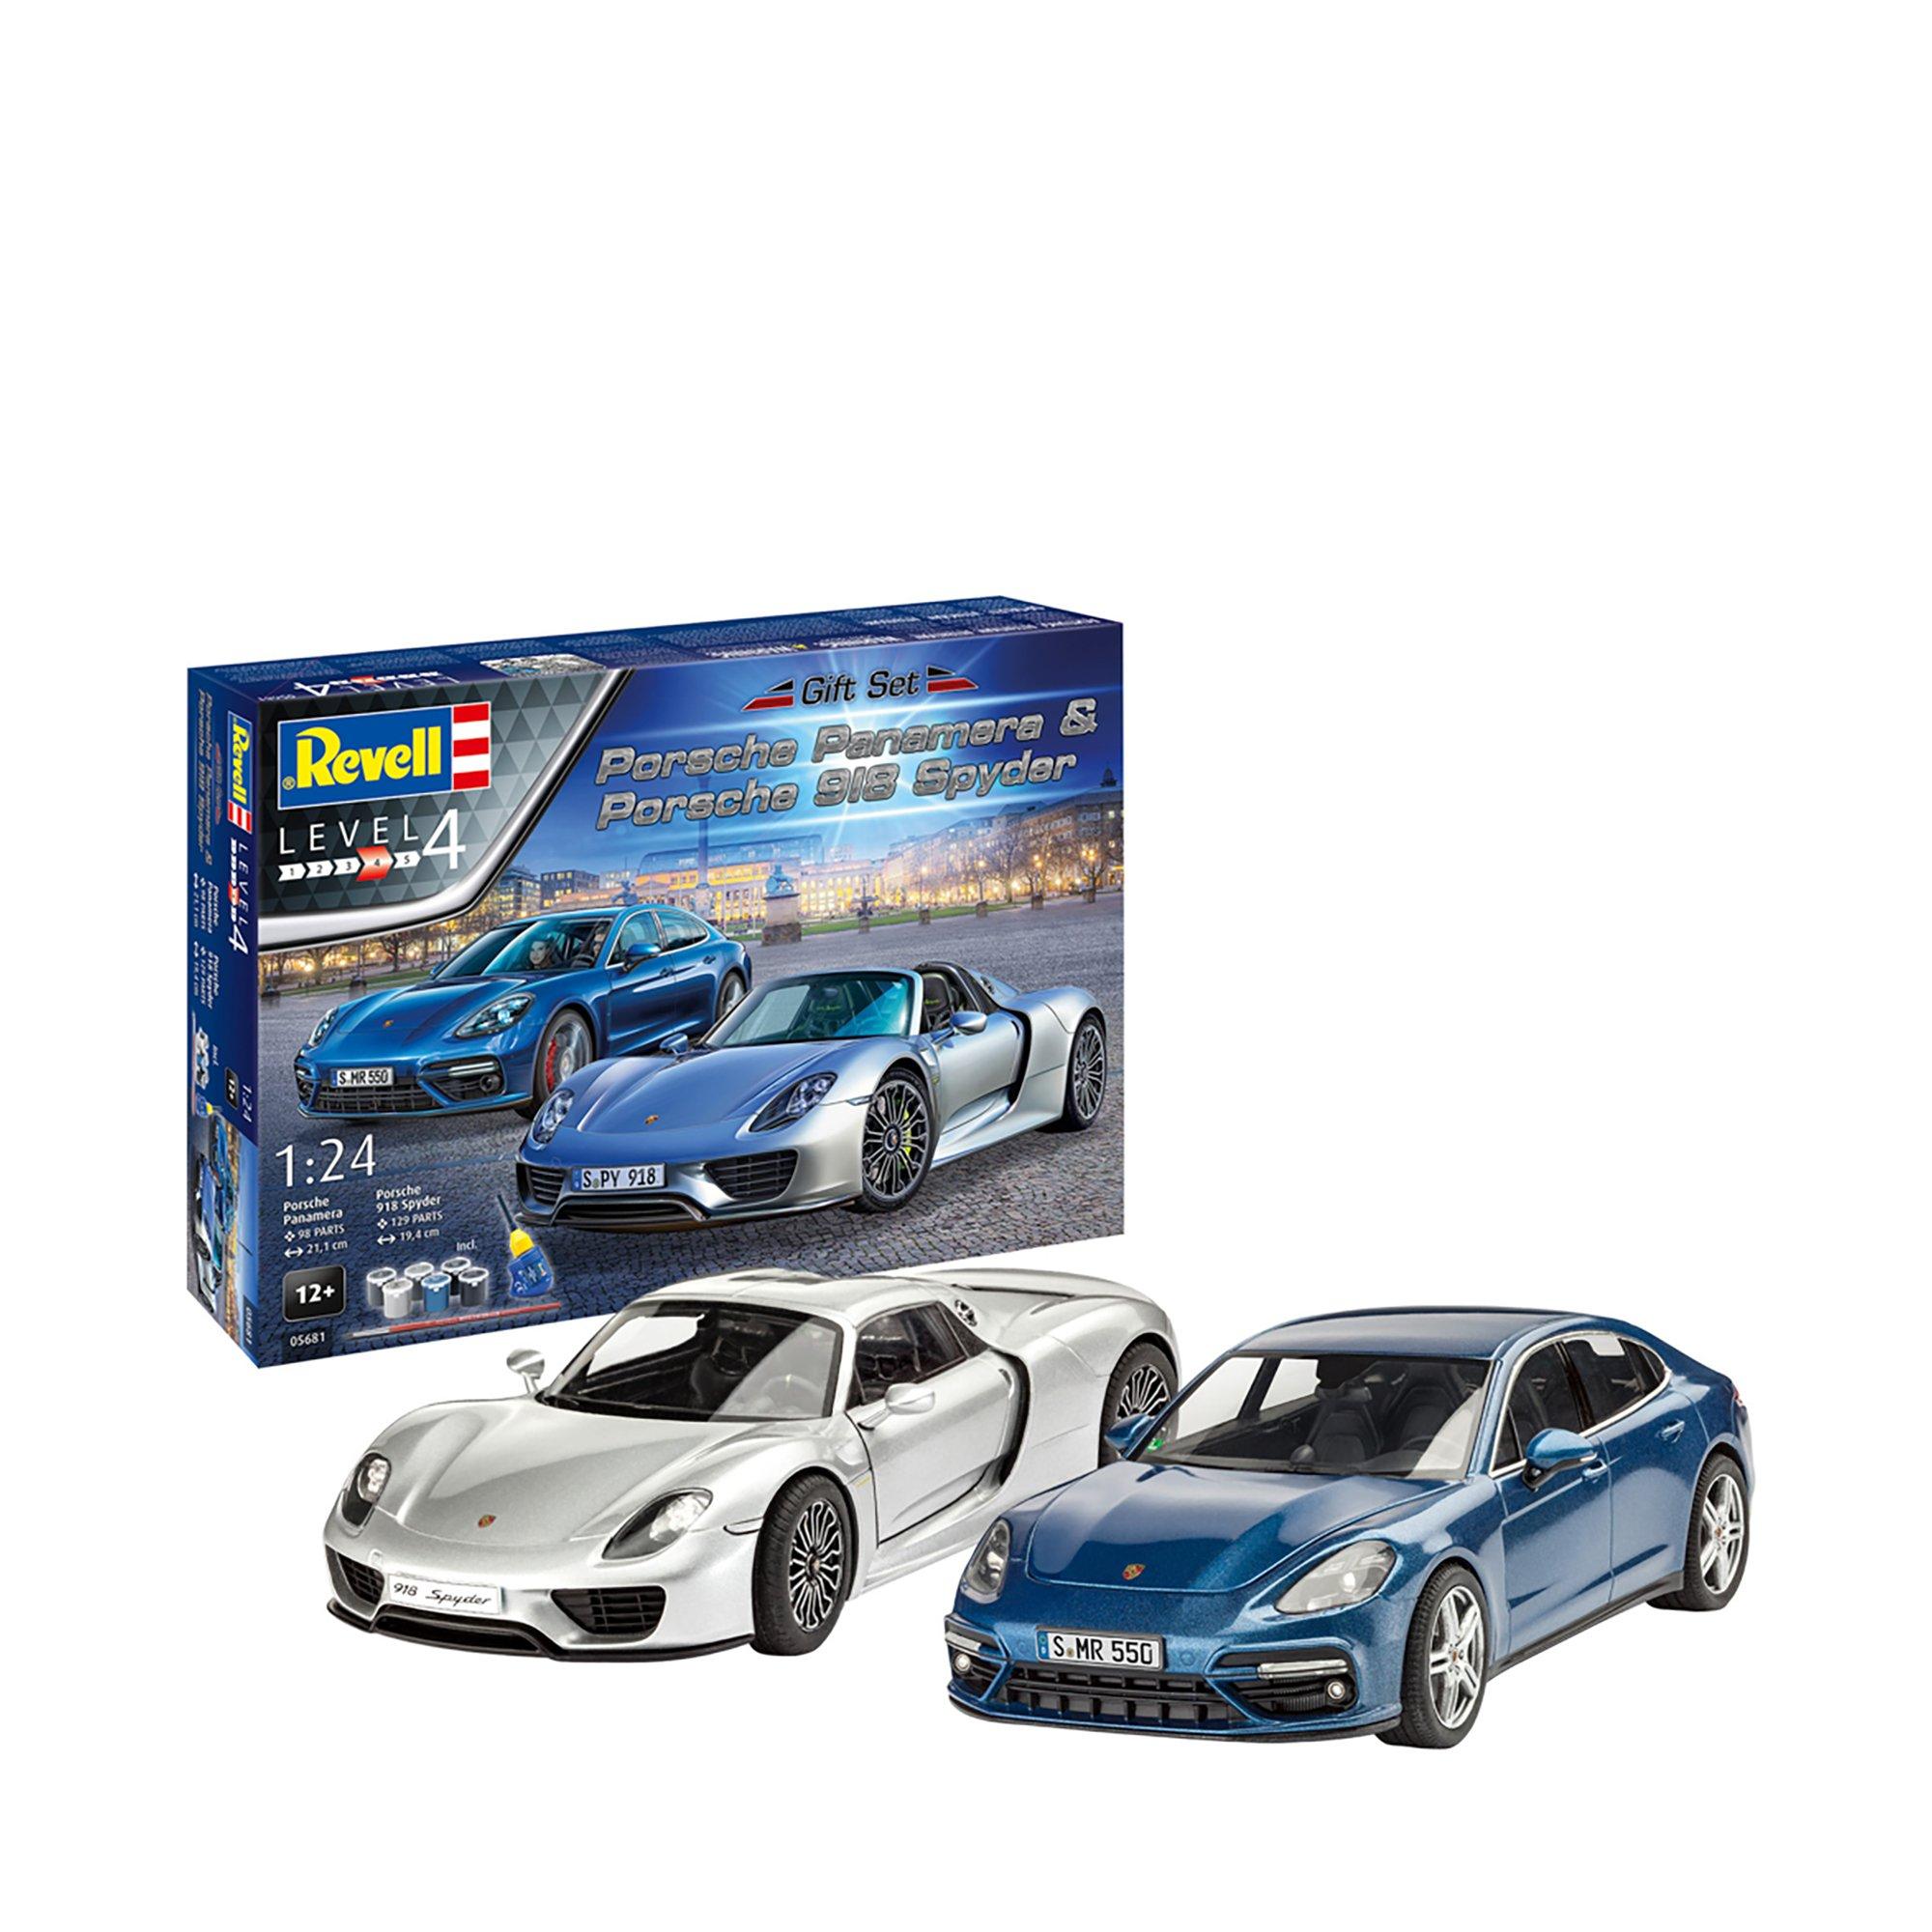 Revell  Gift Set Porsche Set  